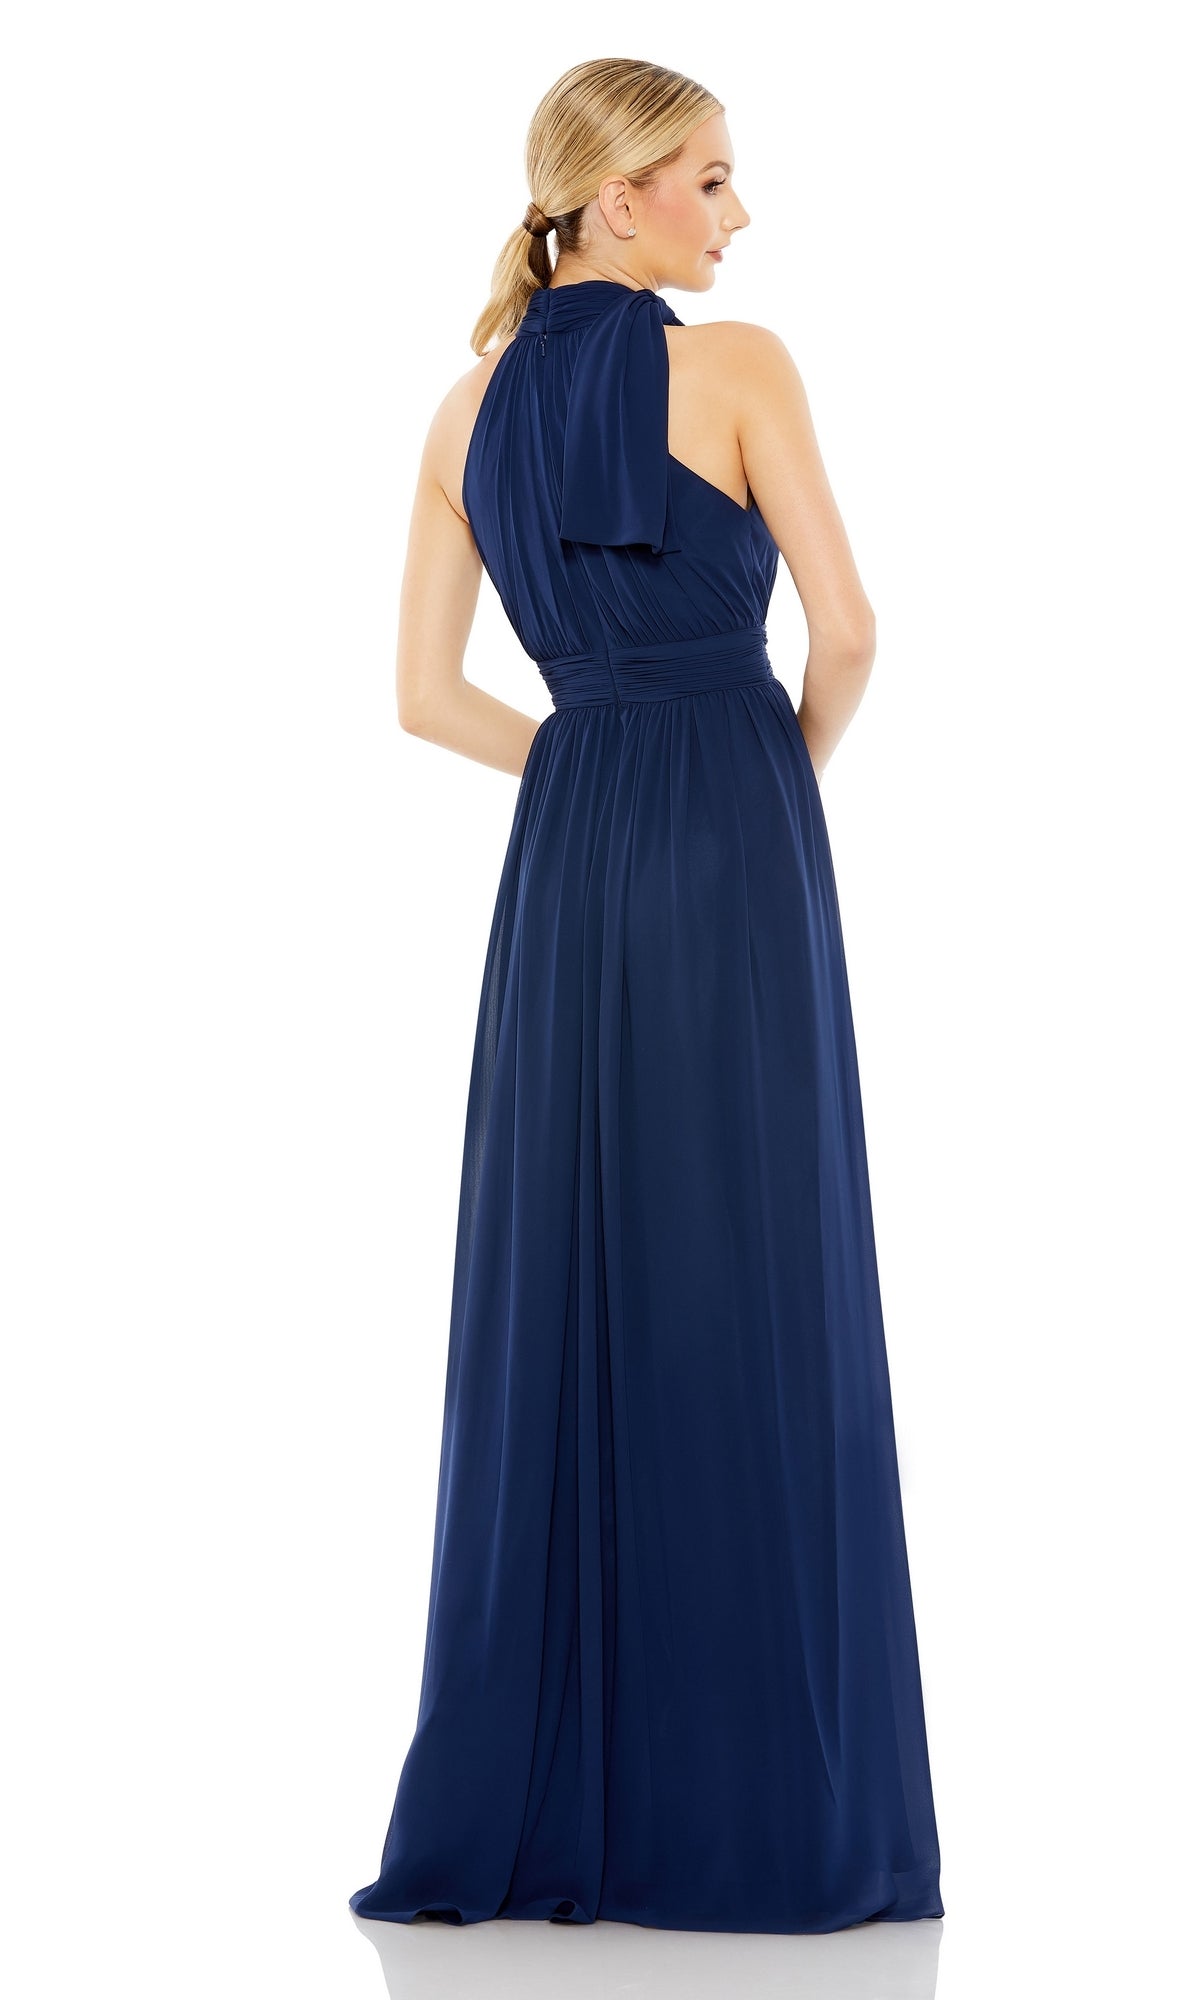 Long Formal Dress 55035 by Mac Duggal